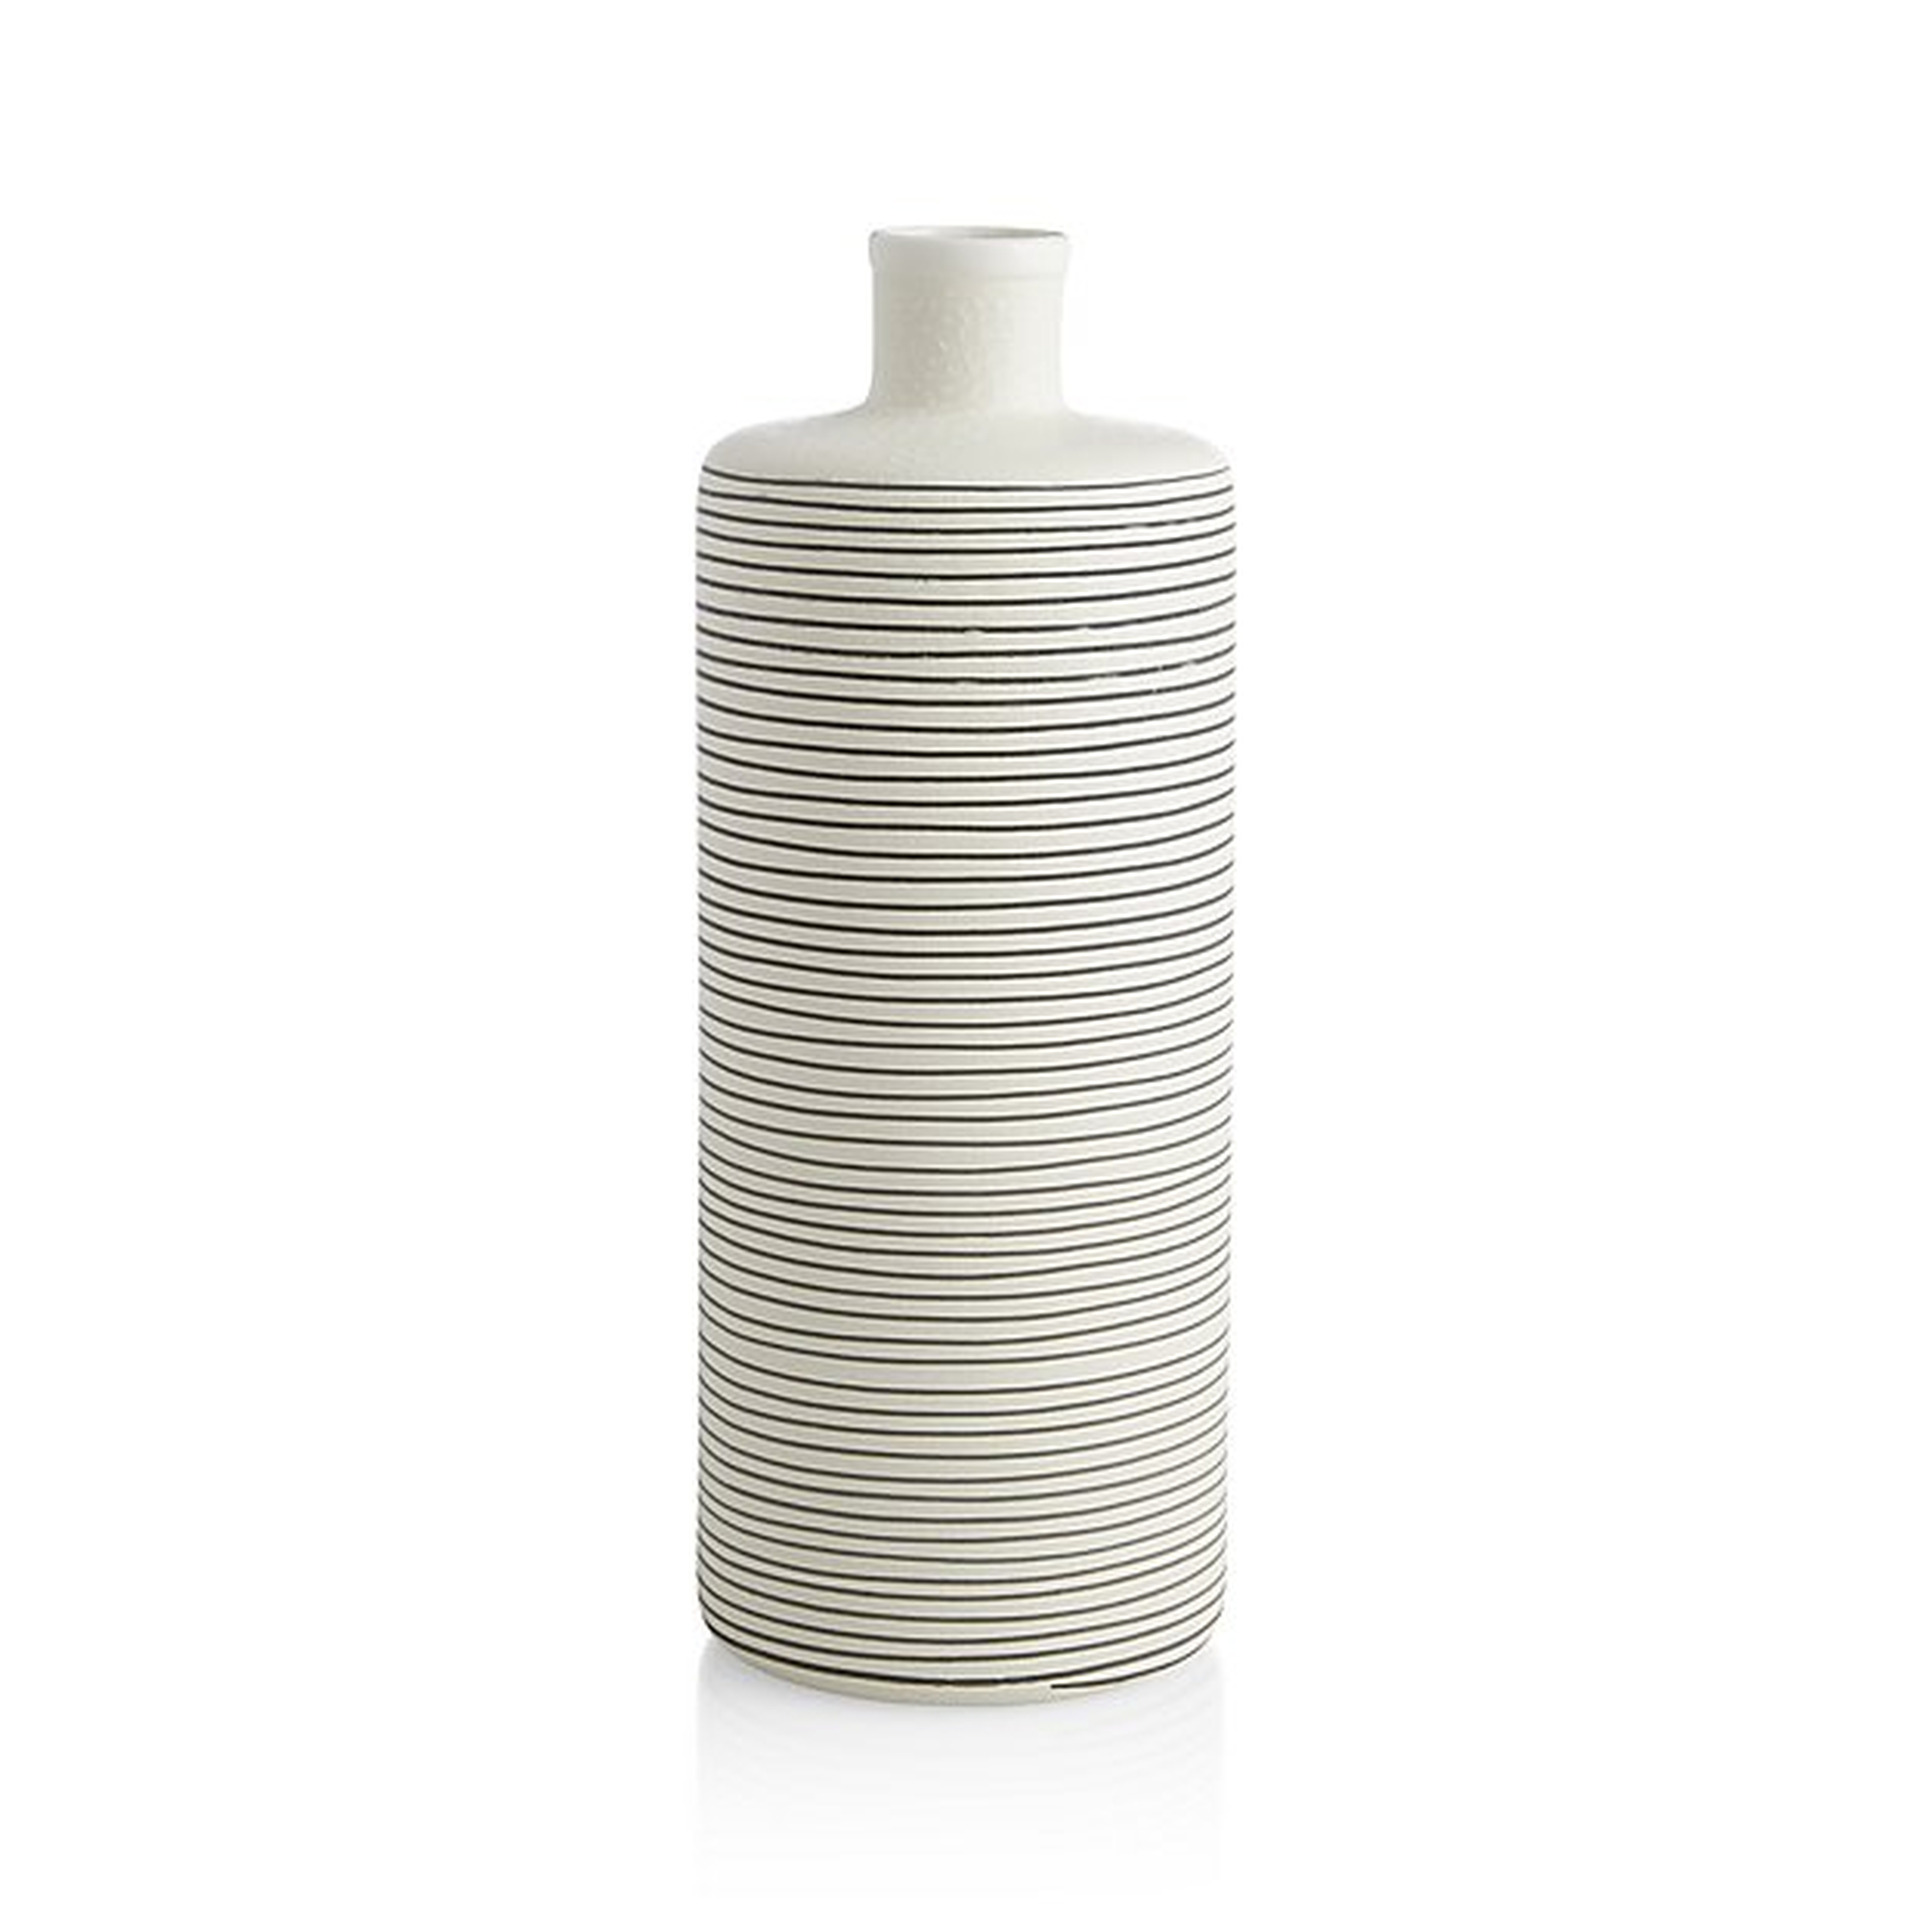 Raya Cream Bottle Vase - Crate and Barrel